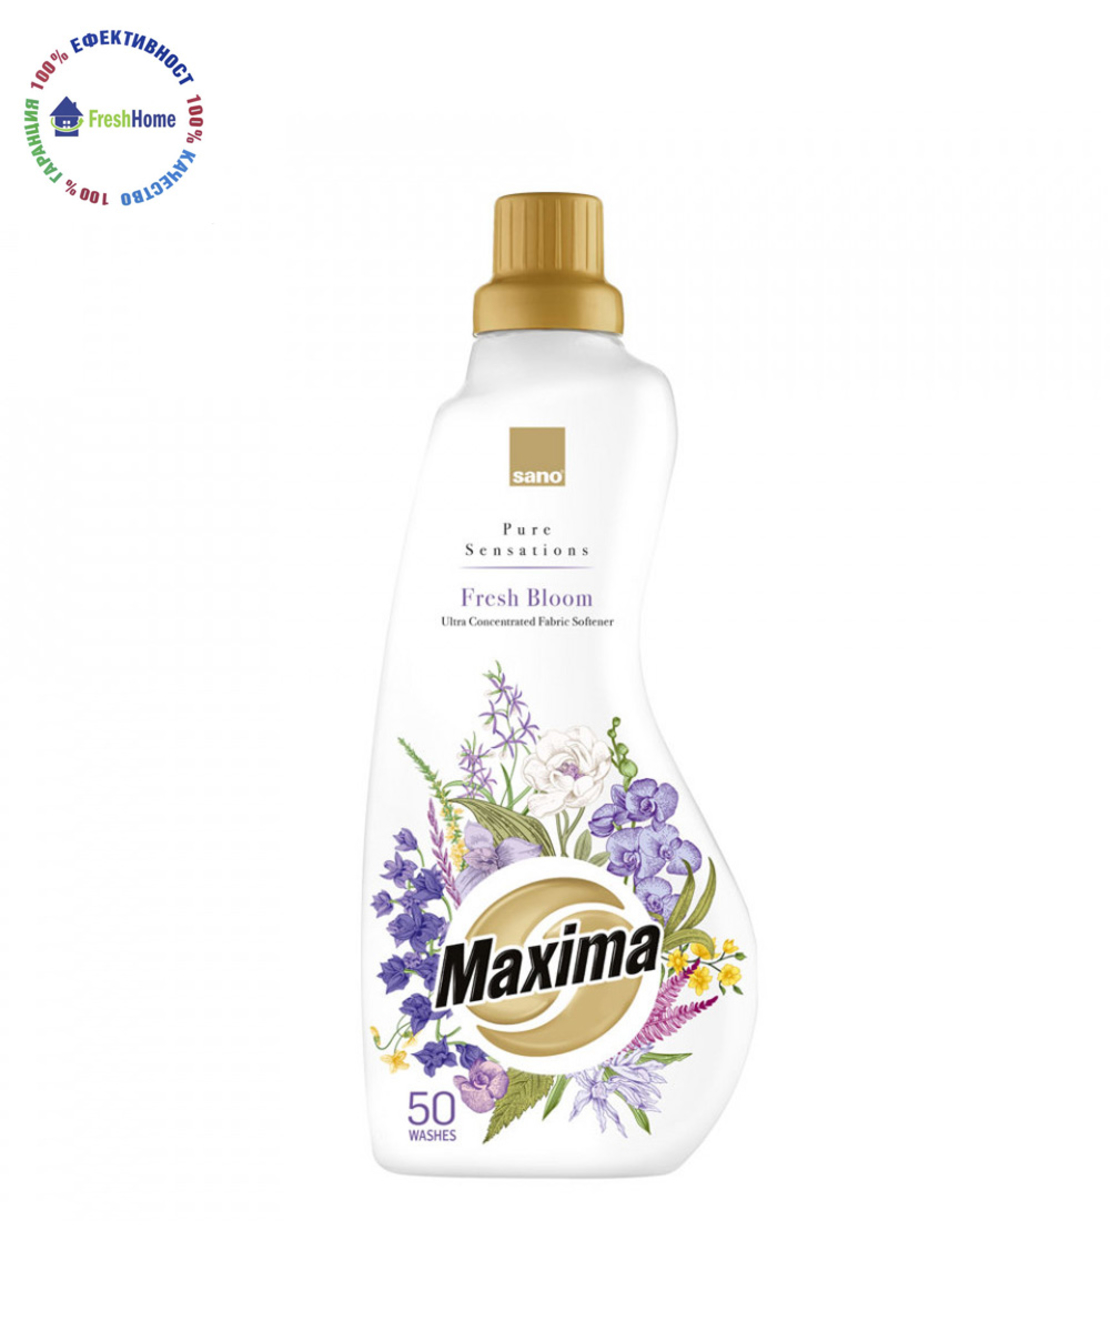 Sano Maxima “Fresh Bloom” концентриран омекотител 50 пранета/1л.